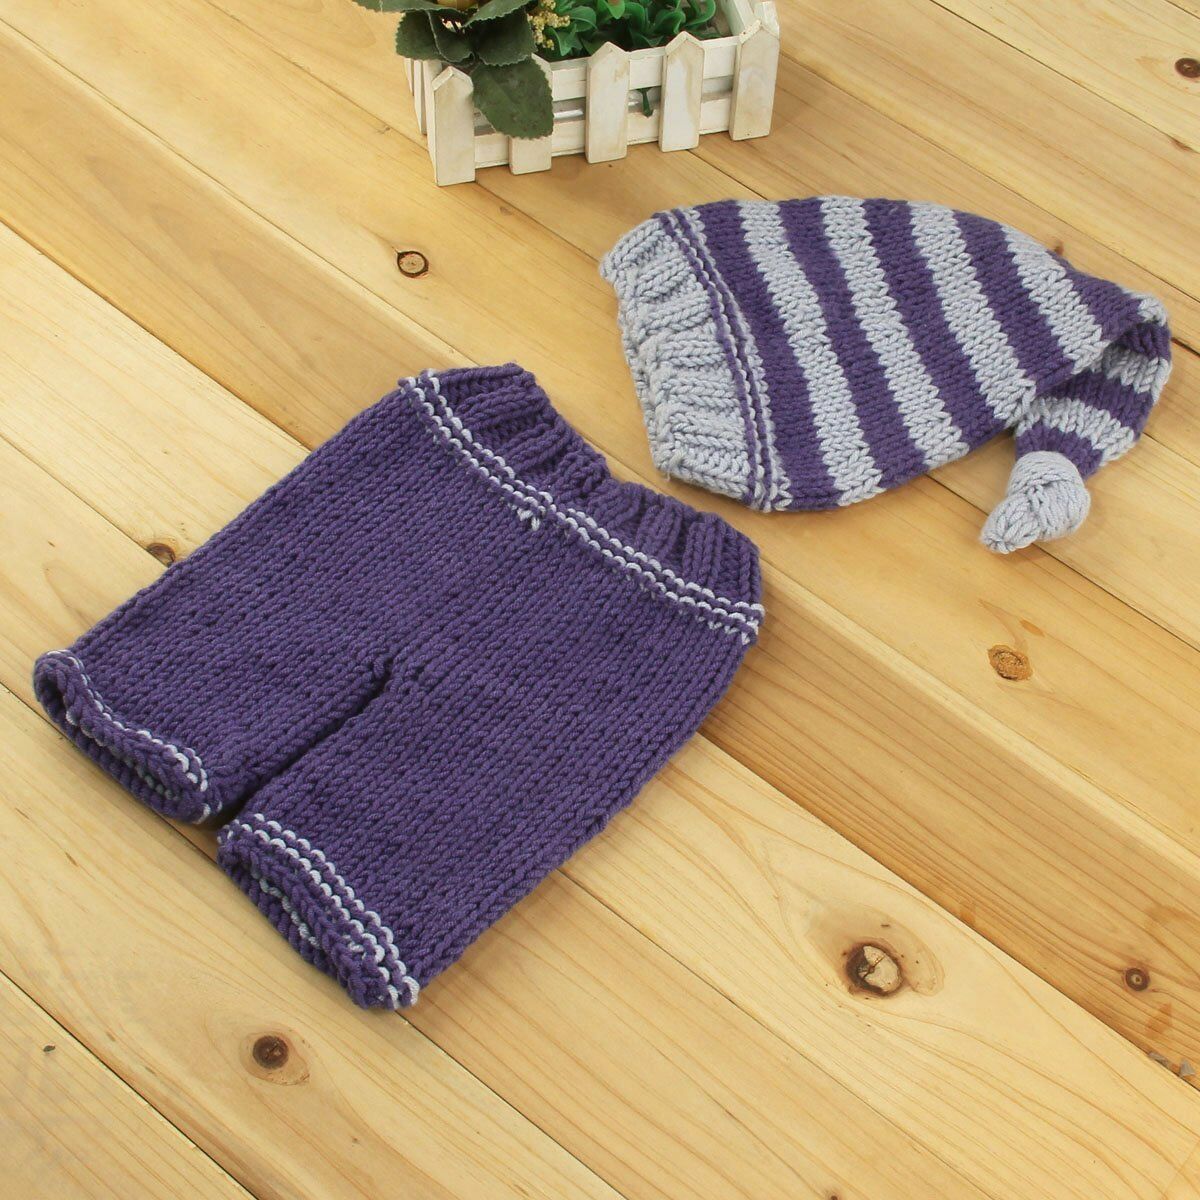 Newborn Baby Prop Outfits Boy Girls Crochet Knit Costume Photo Photography Set